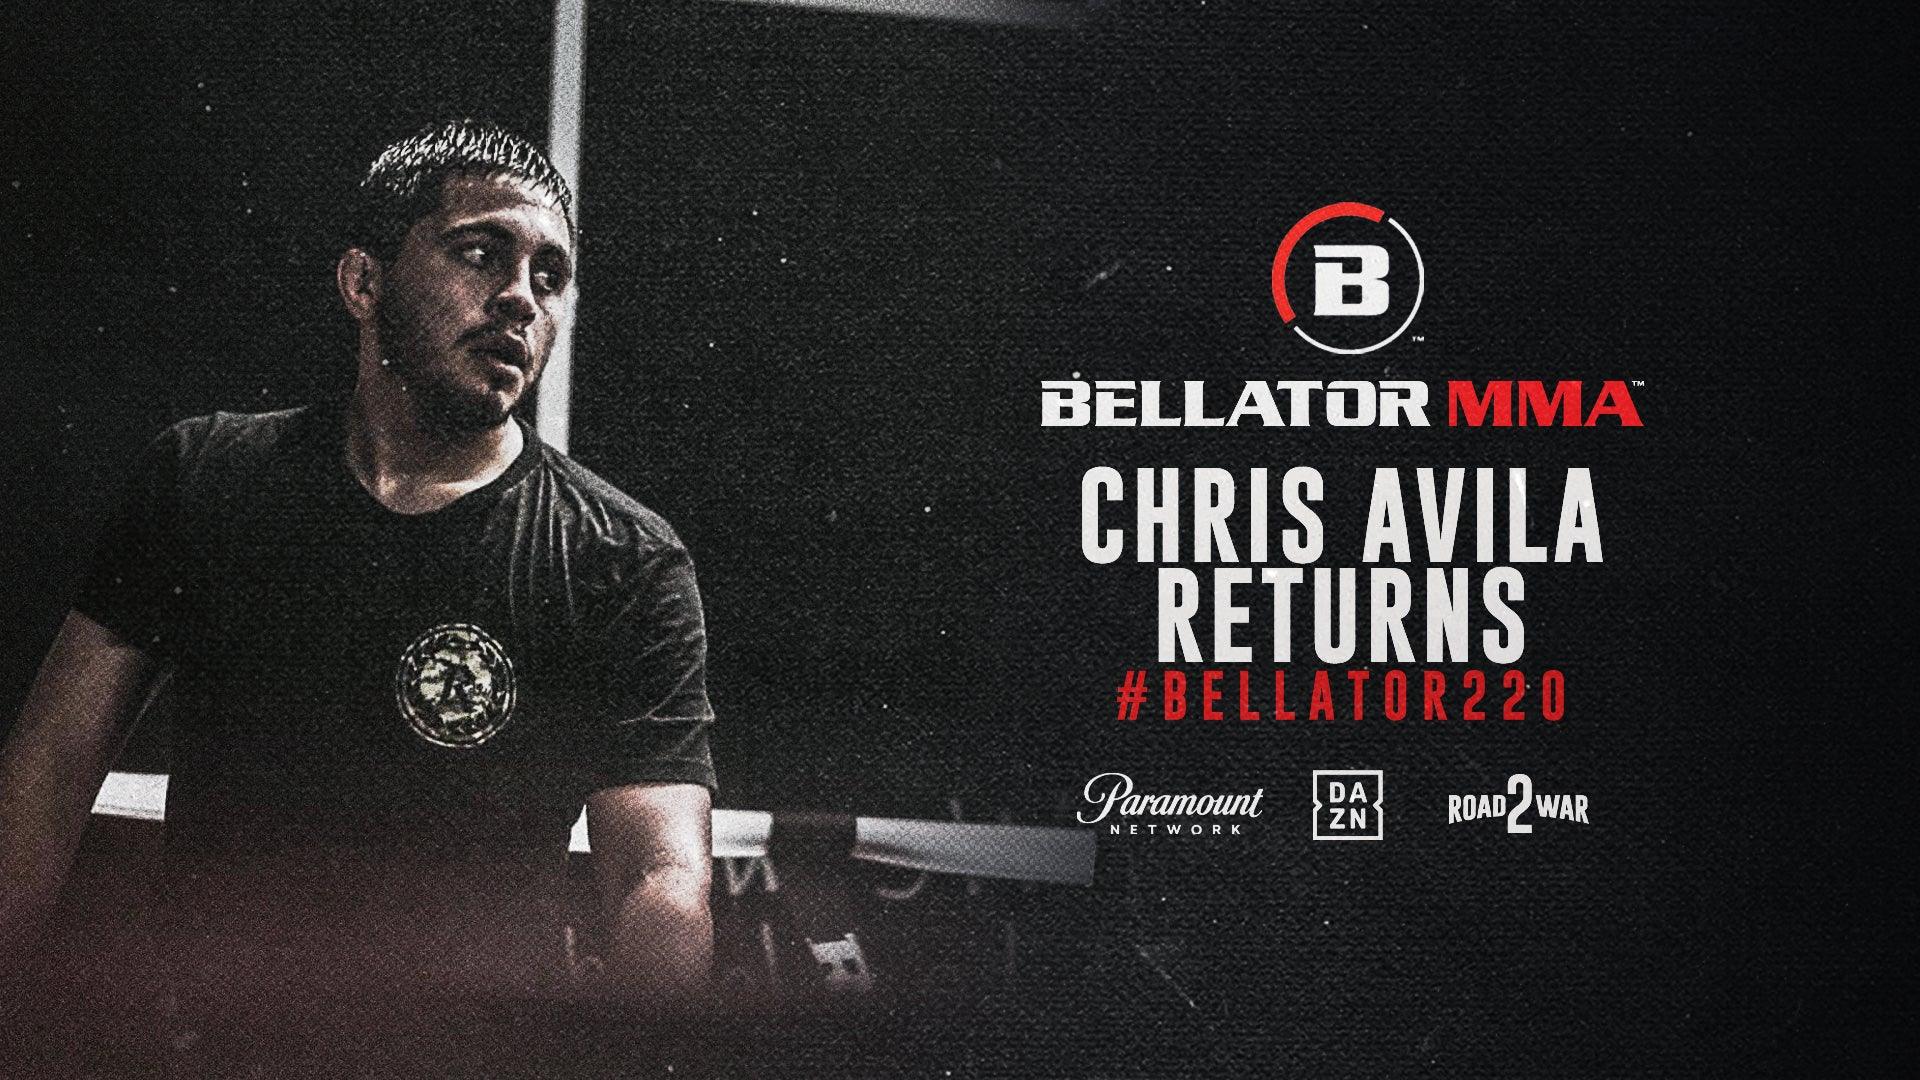 Chris Avila Returns to the Cage at Bellator 220 - Represent Ltd.™